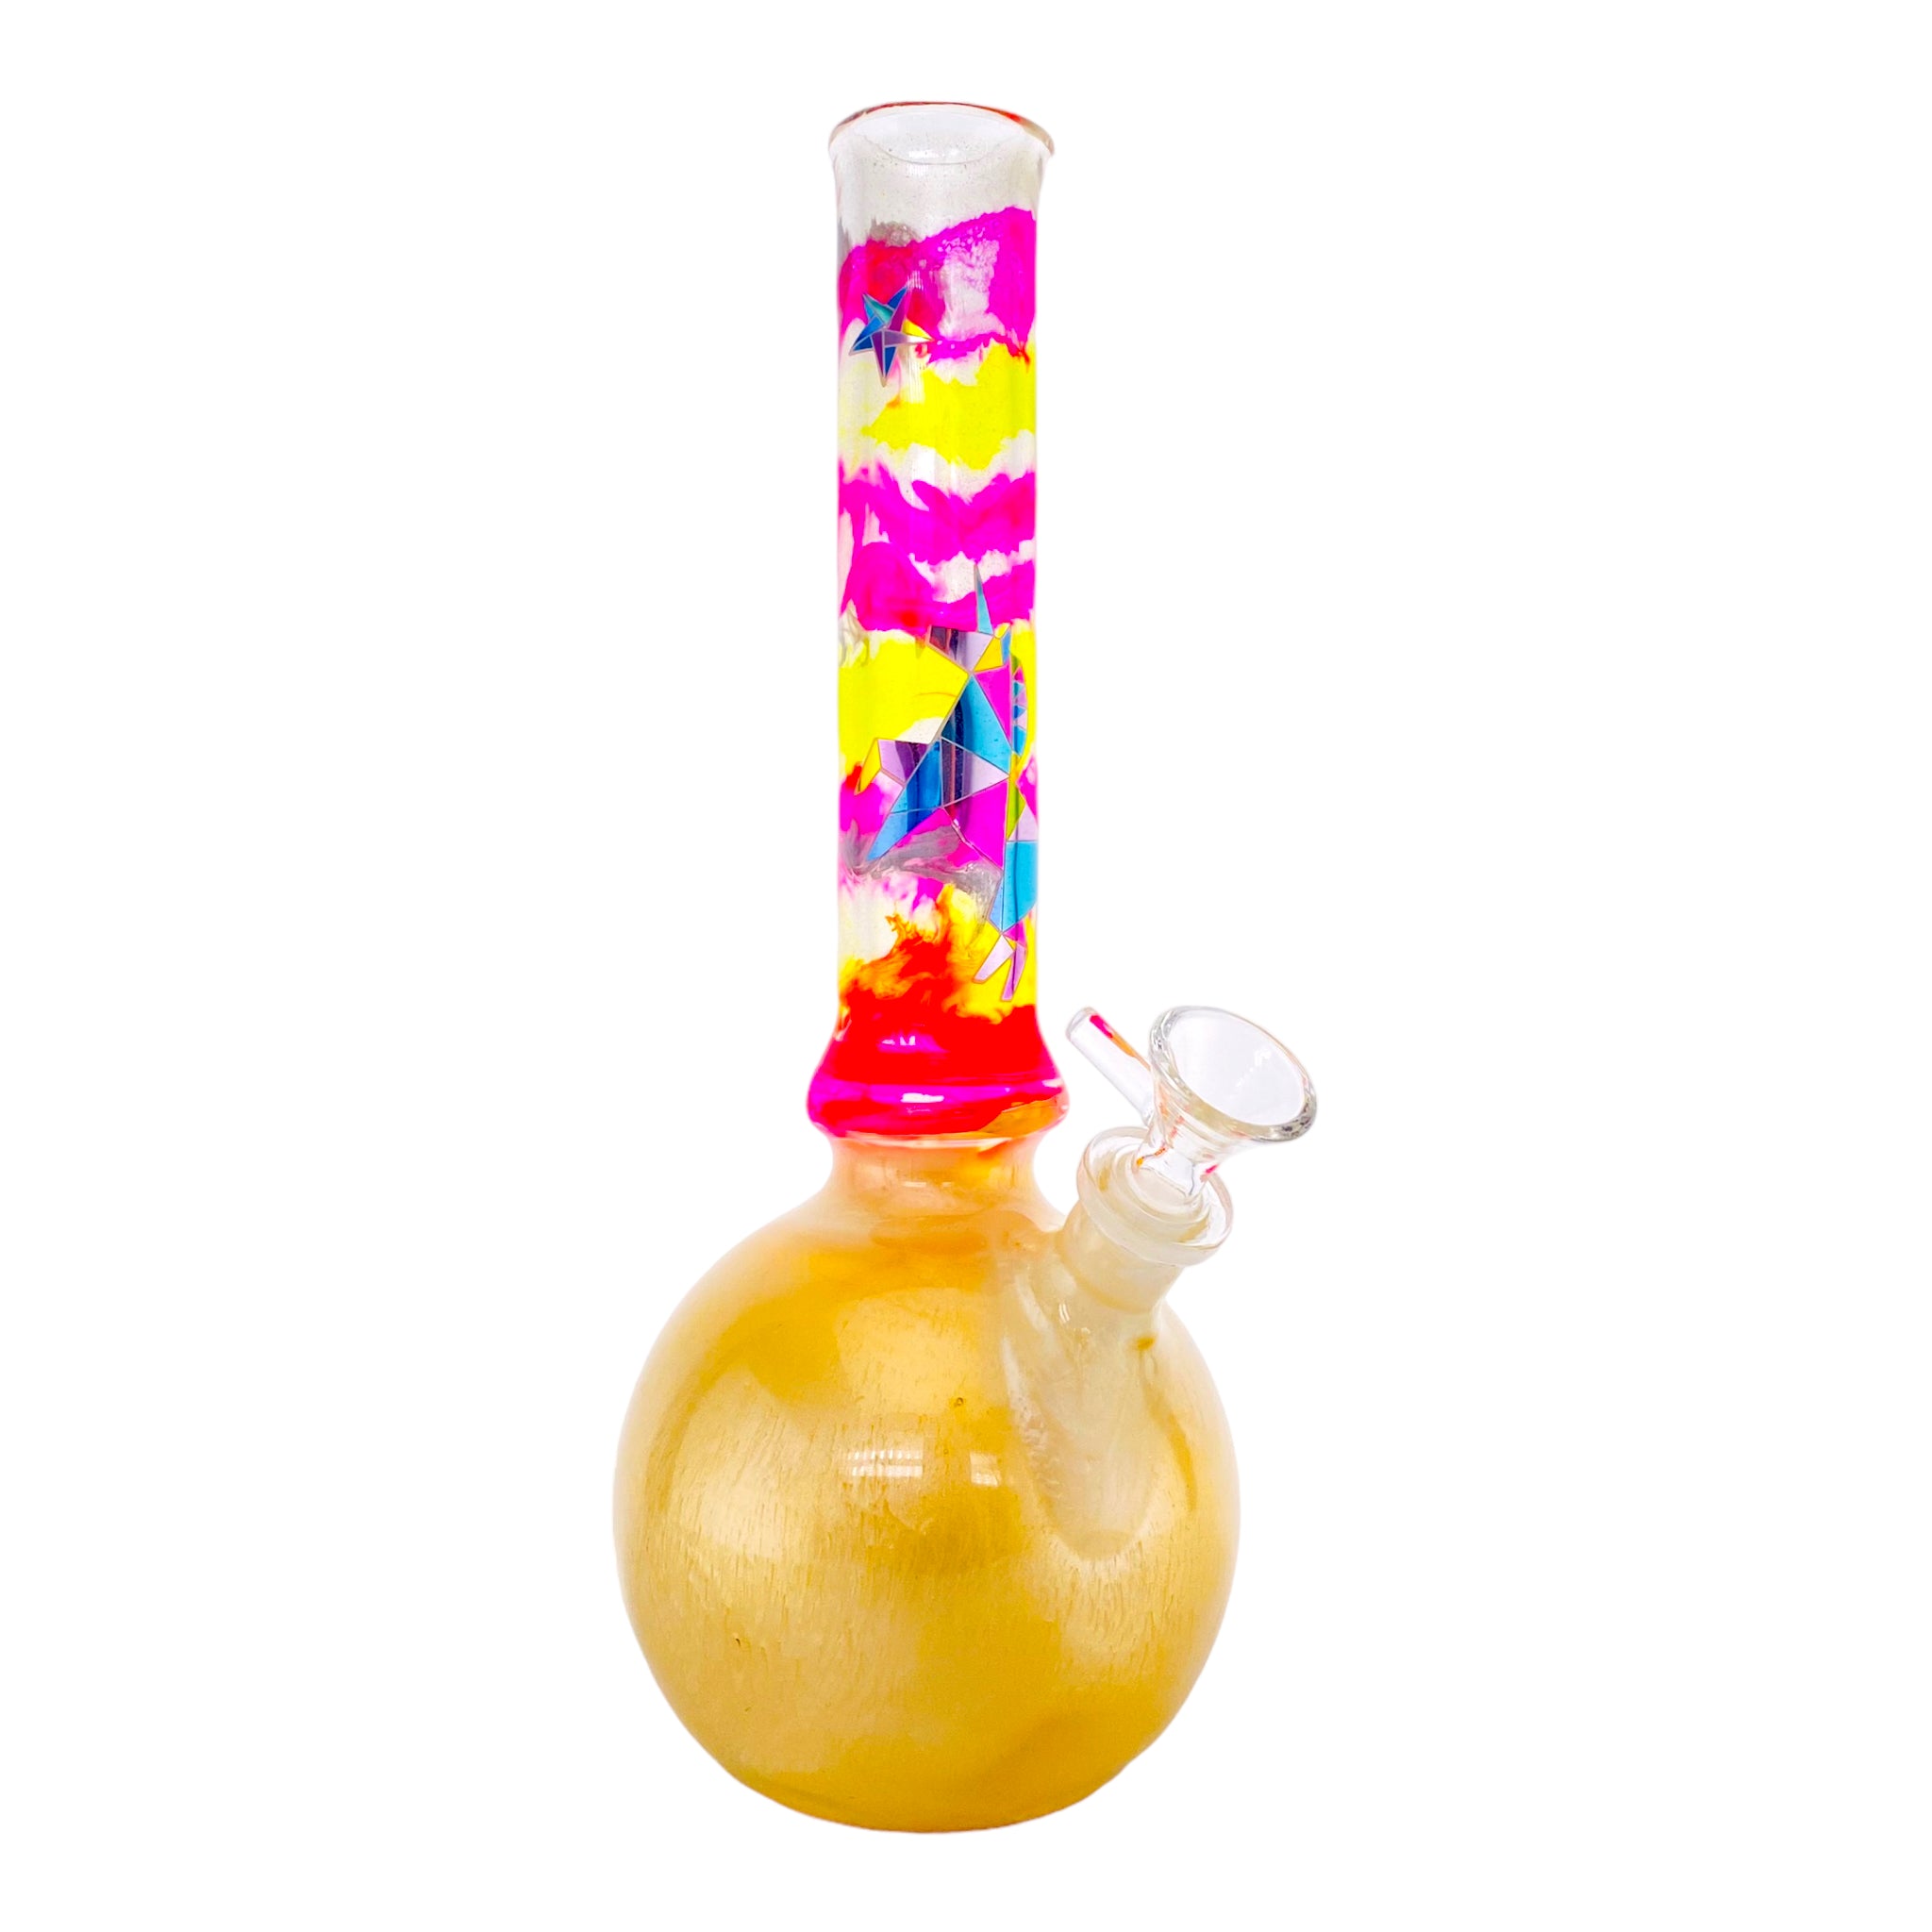 Oregon Blown Glass - Pink And Yellow Unicorn Decal Bubble Base Bong